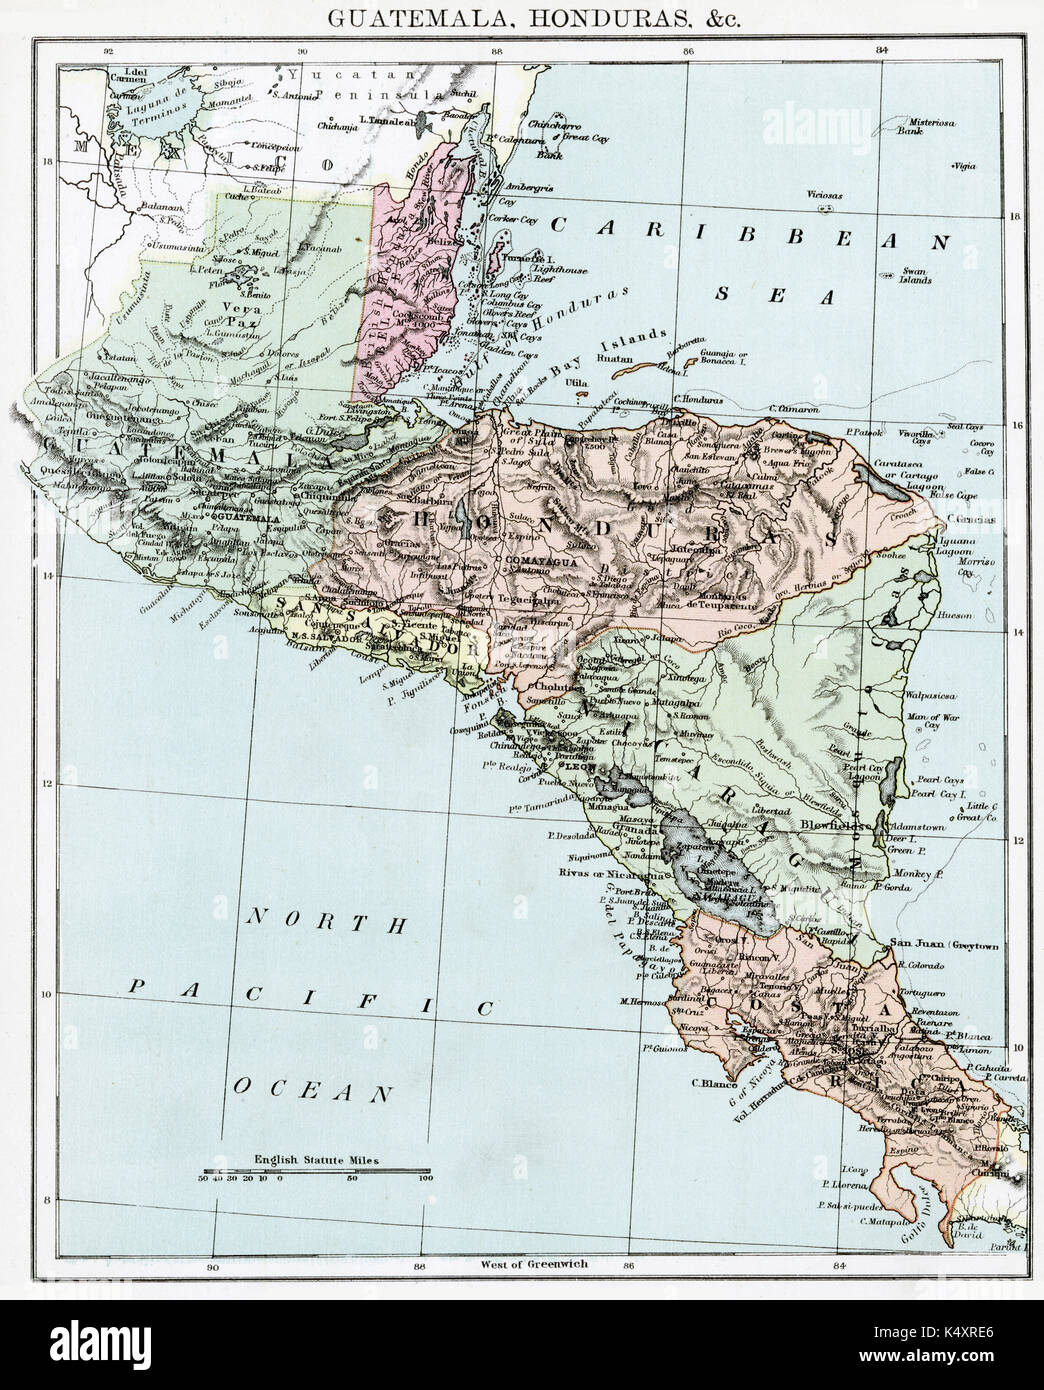 Antique map, circa 1875, of Guatemala & Honduras Stock Photo